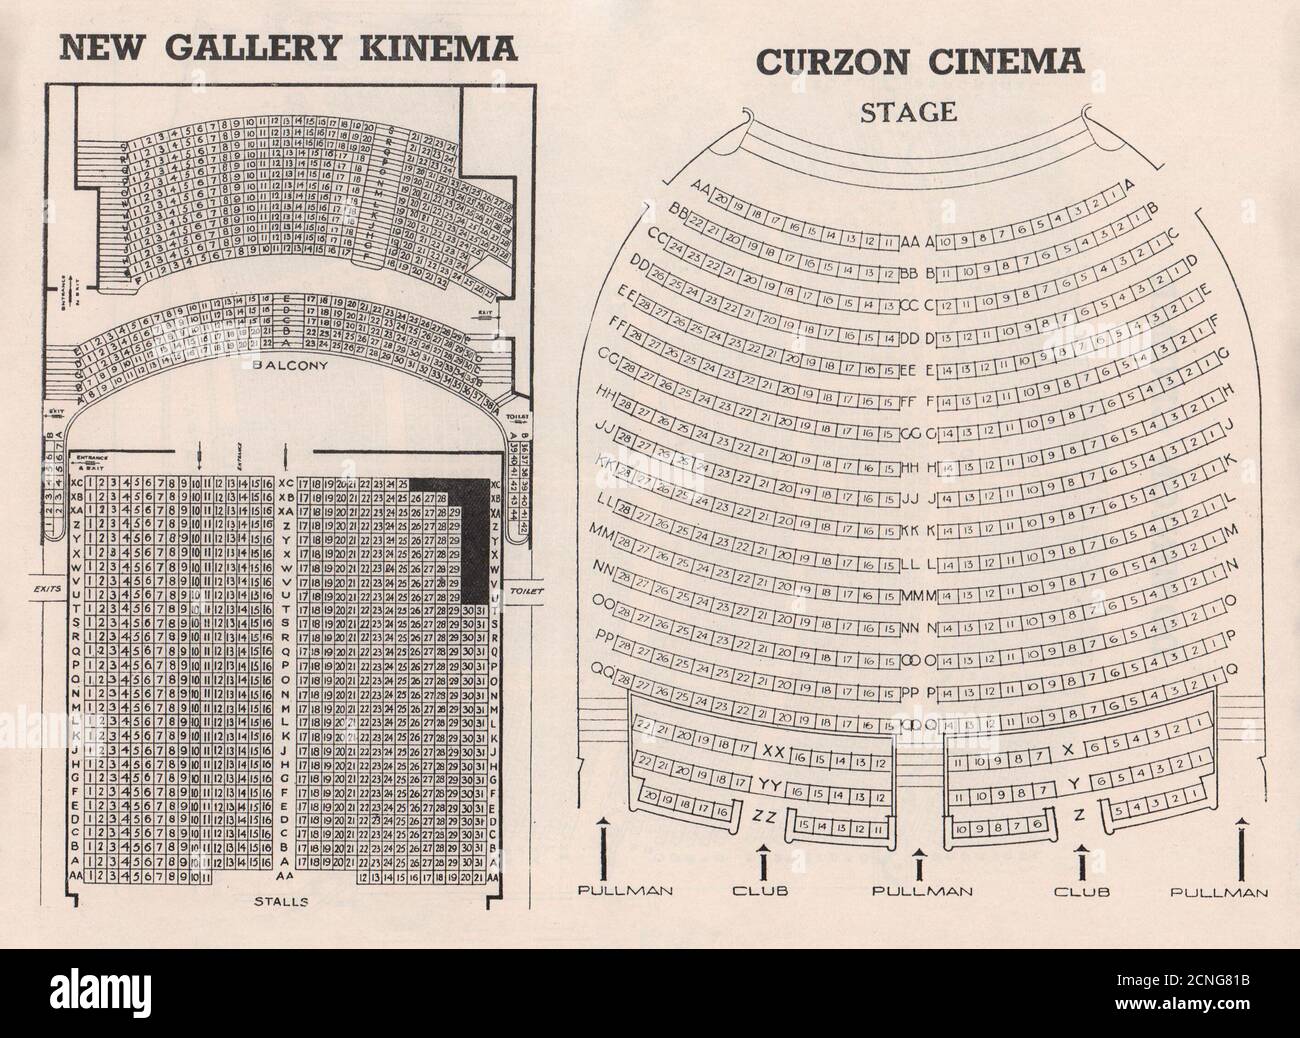 NEW GALLERY KINEMA Regent St. CURZON CINEMA Mayfair vintage seating plans 1937 Stock Photo